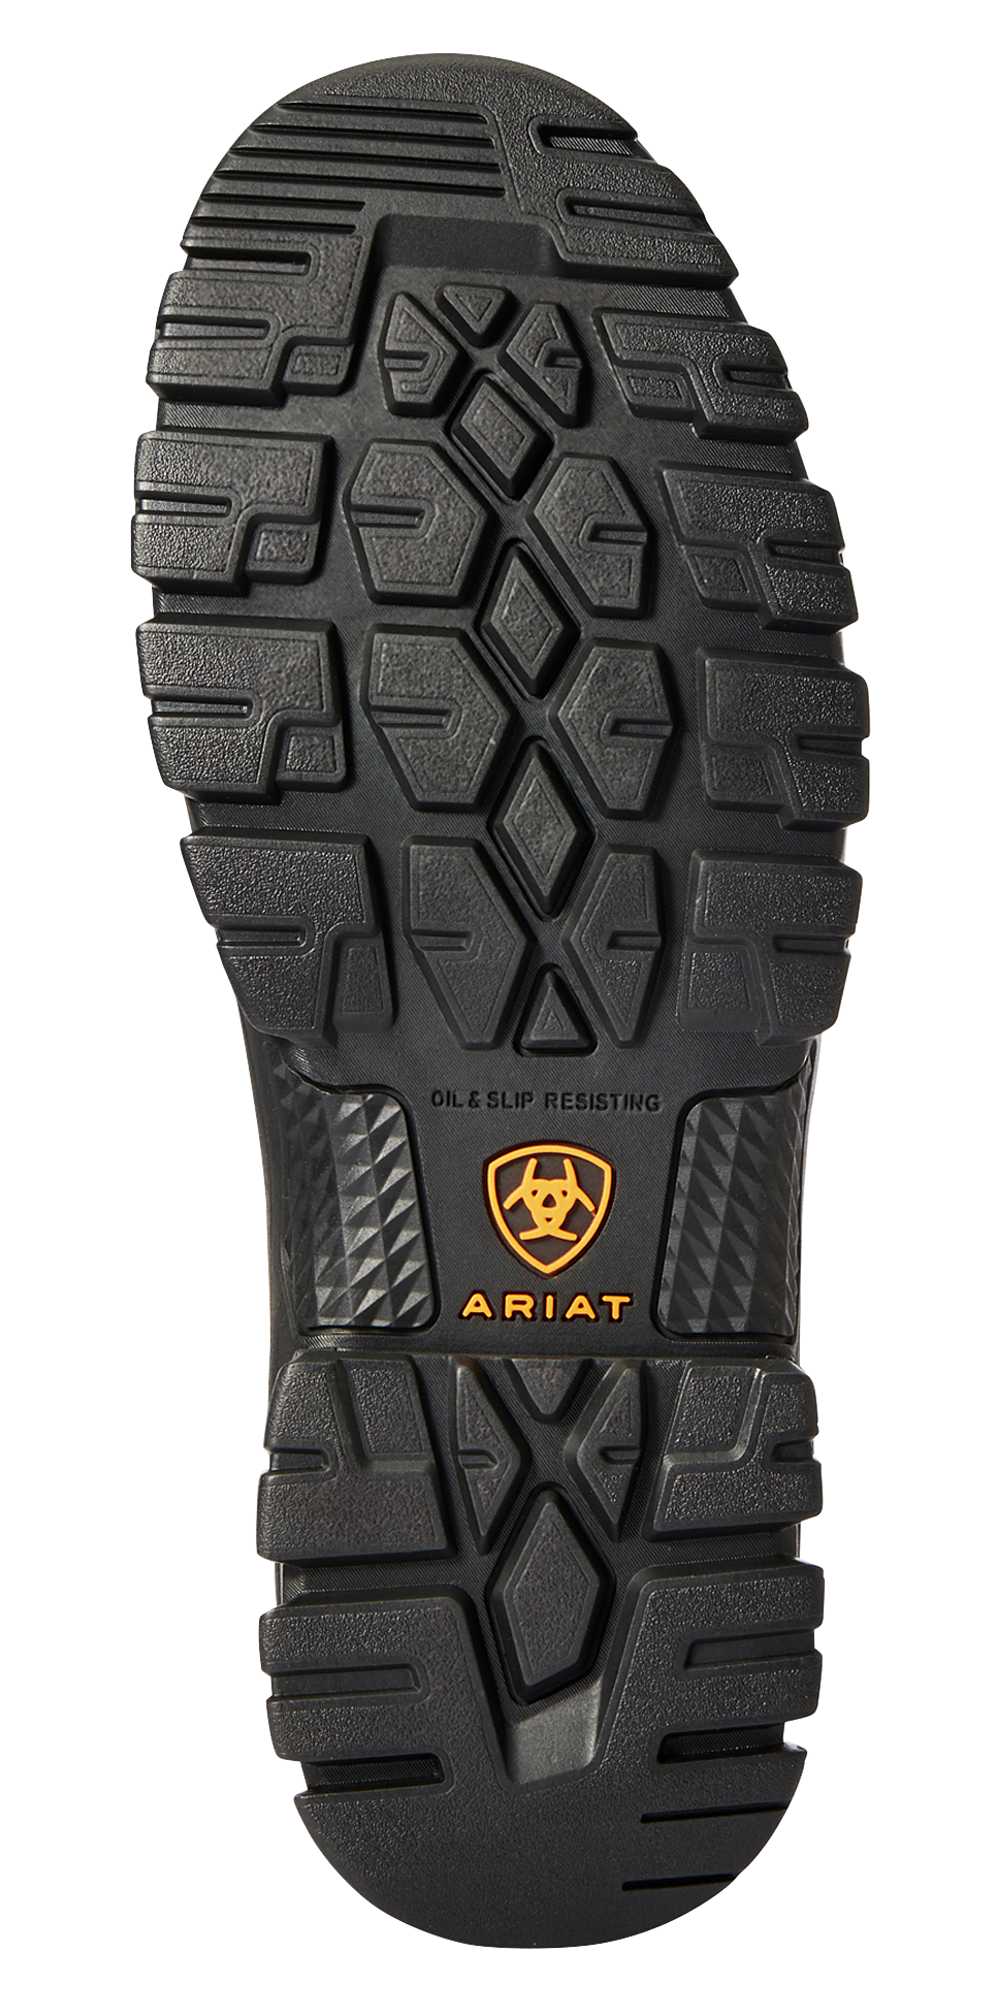 Ariat Treadfast Work Boots for Men - Brown - 8.5M - image 5